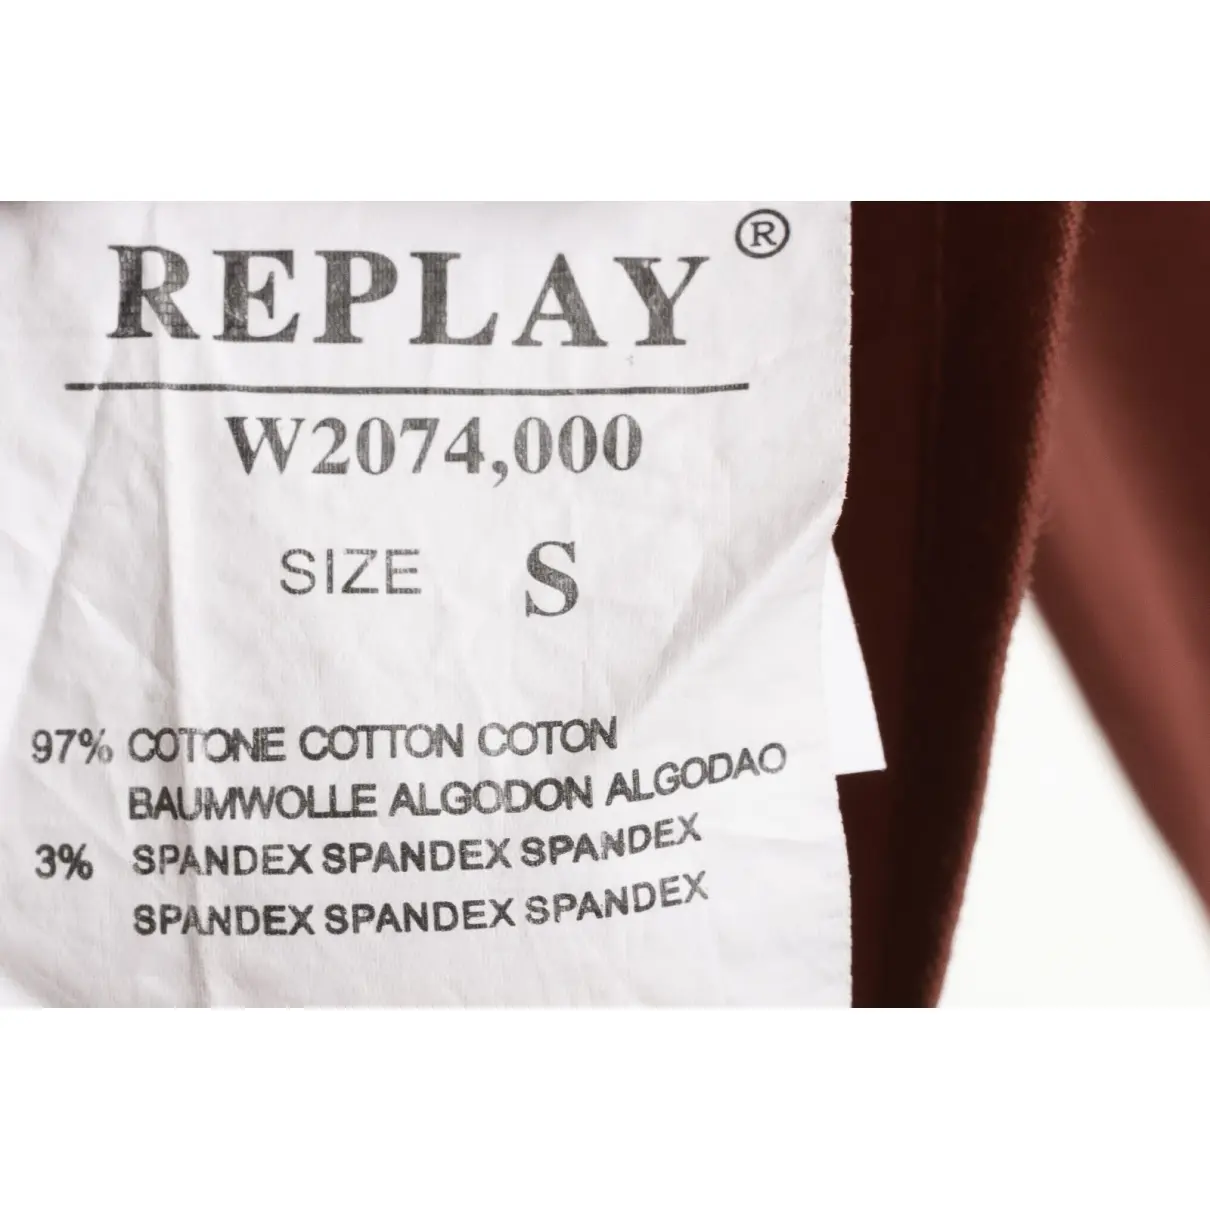 Buy Replay Shirt online